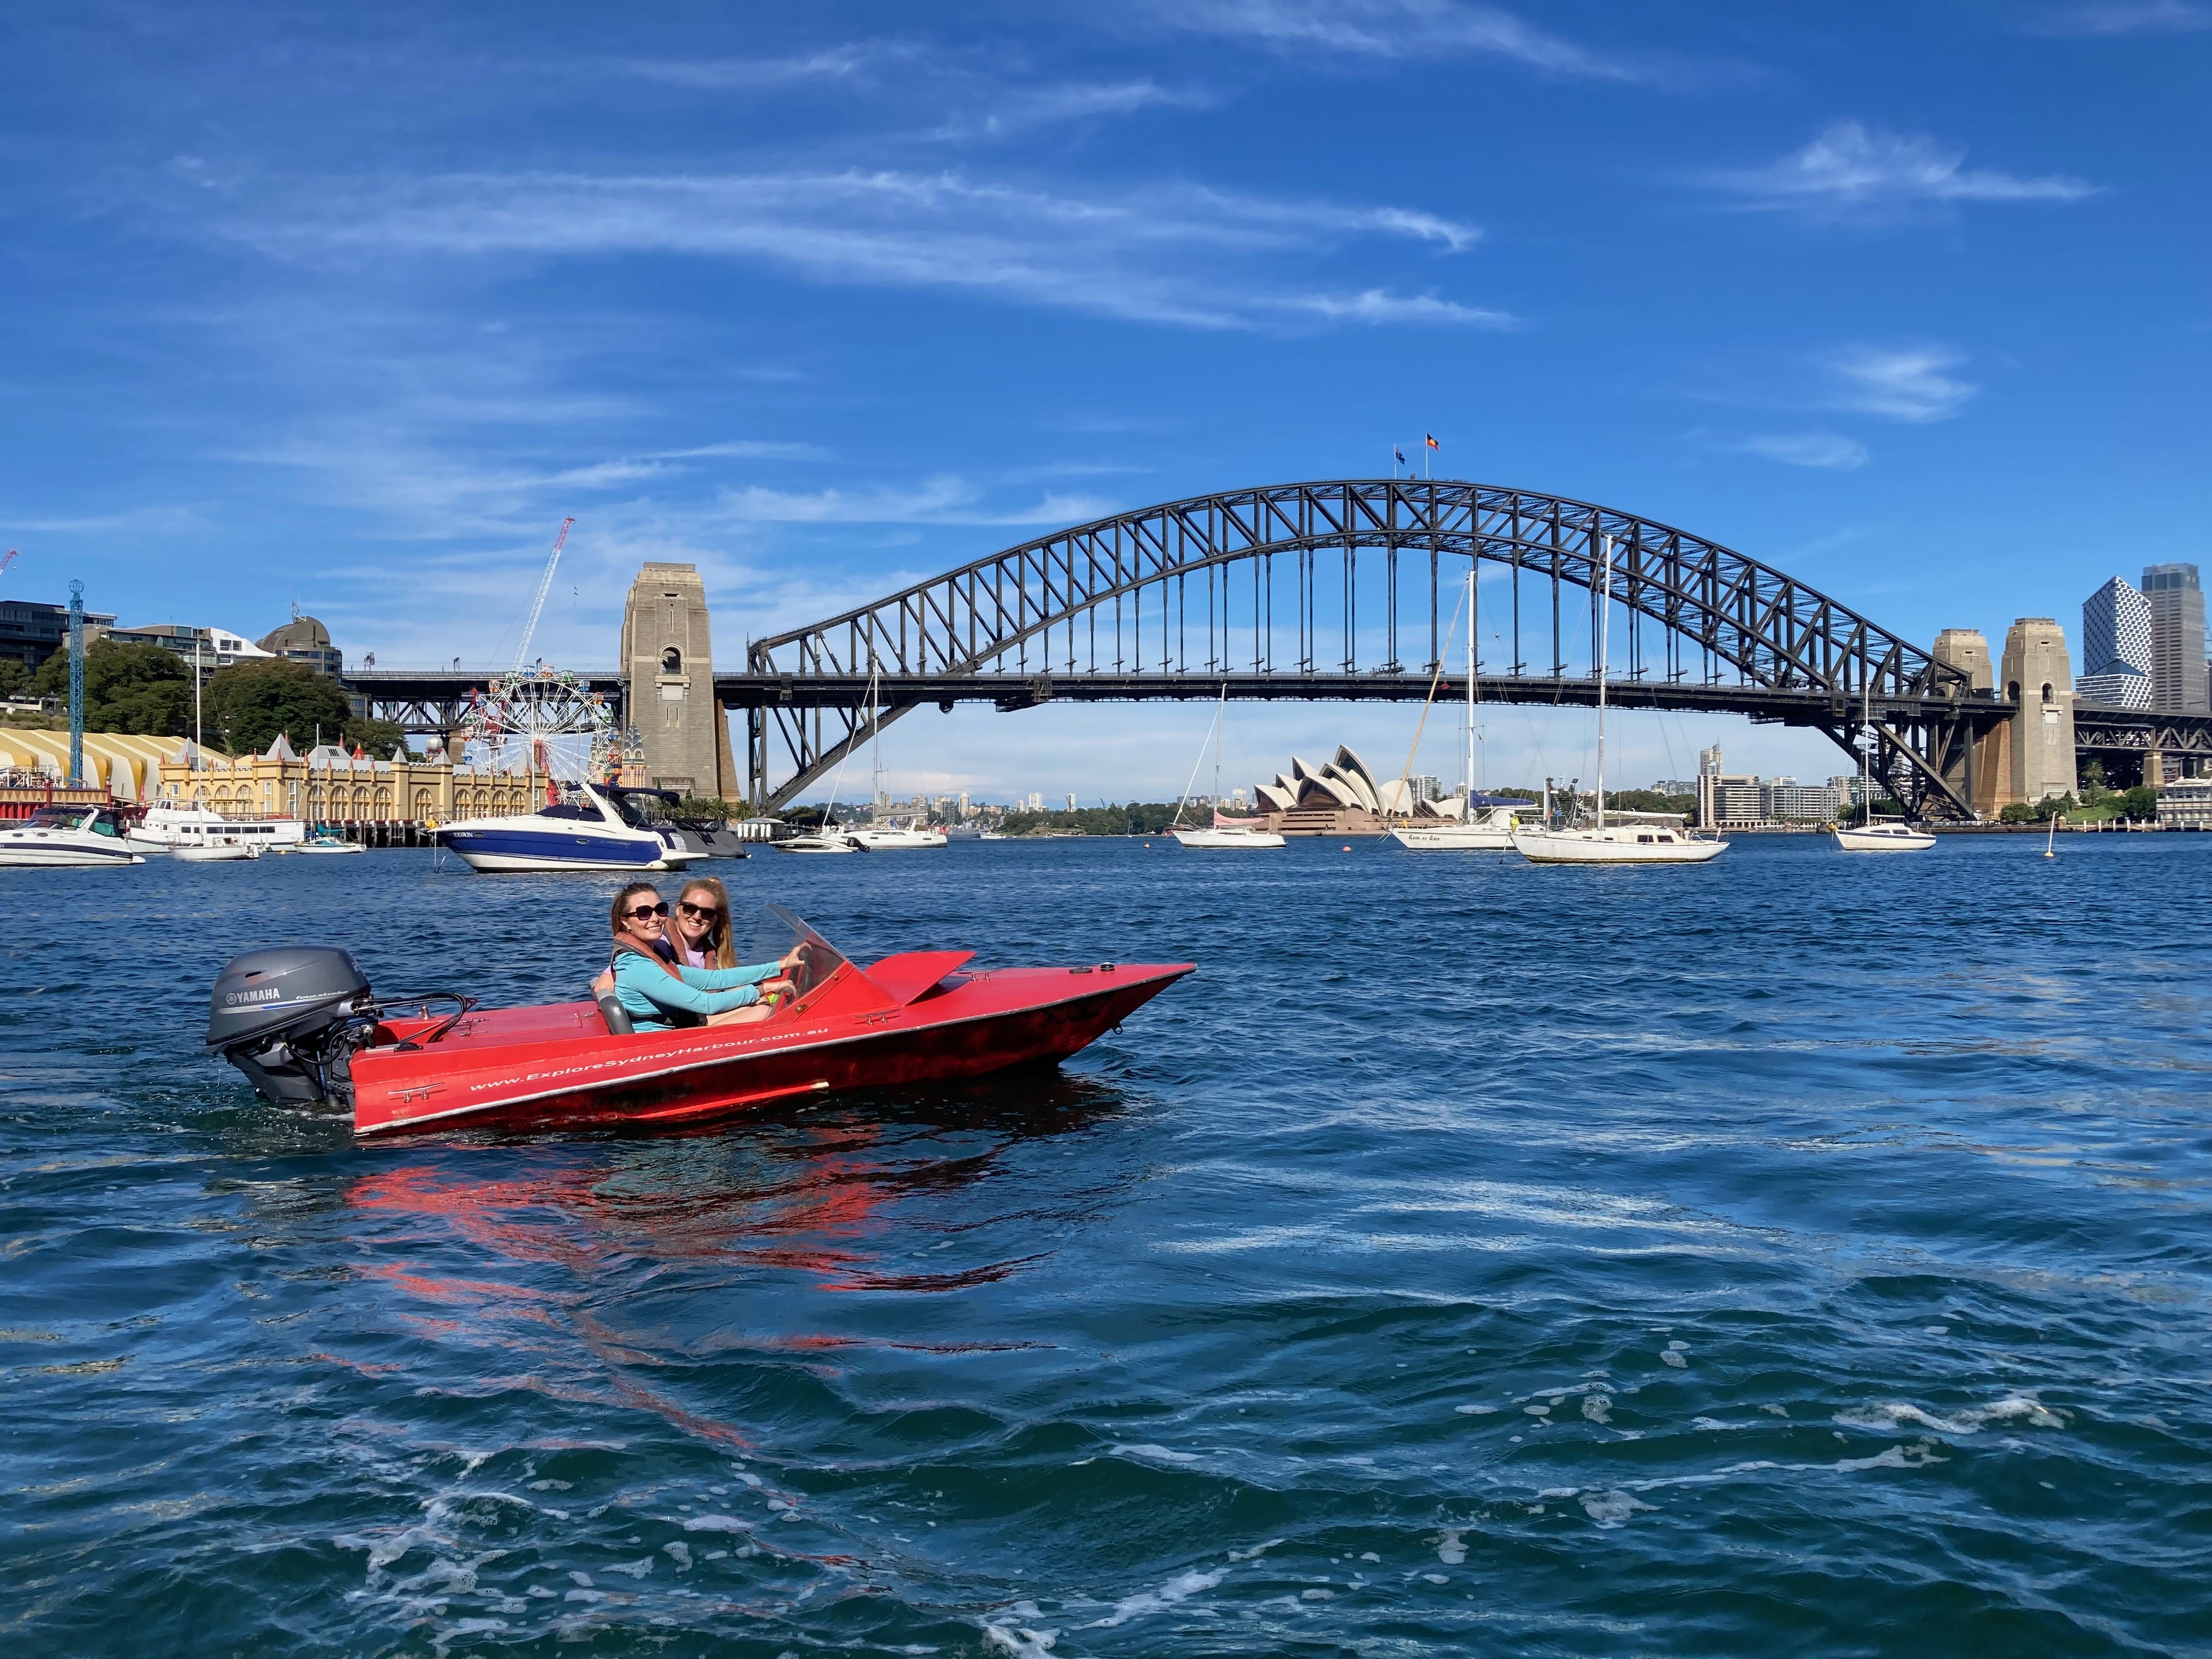 Self Drive Boat Tour, 75 Minutes - Sydney Harbour - For 2